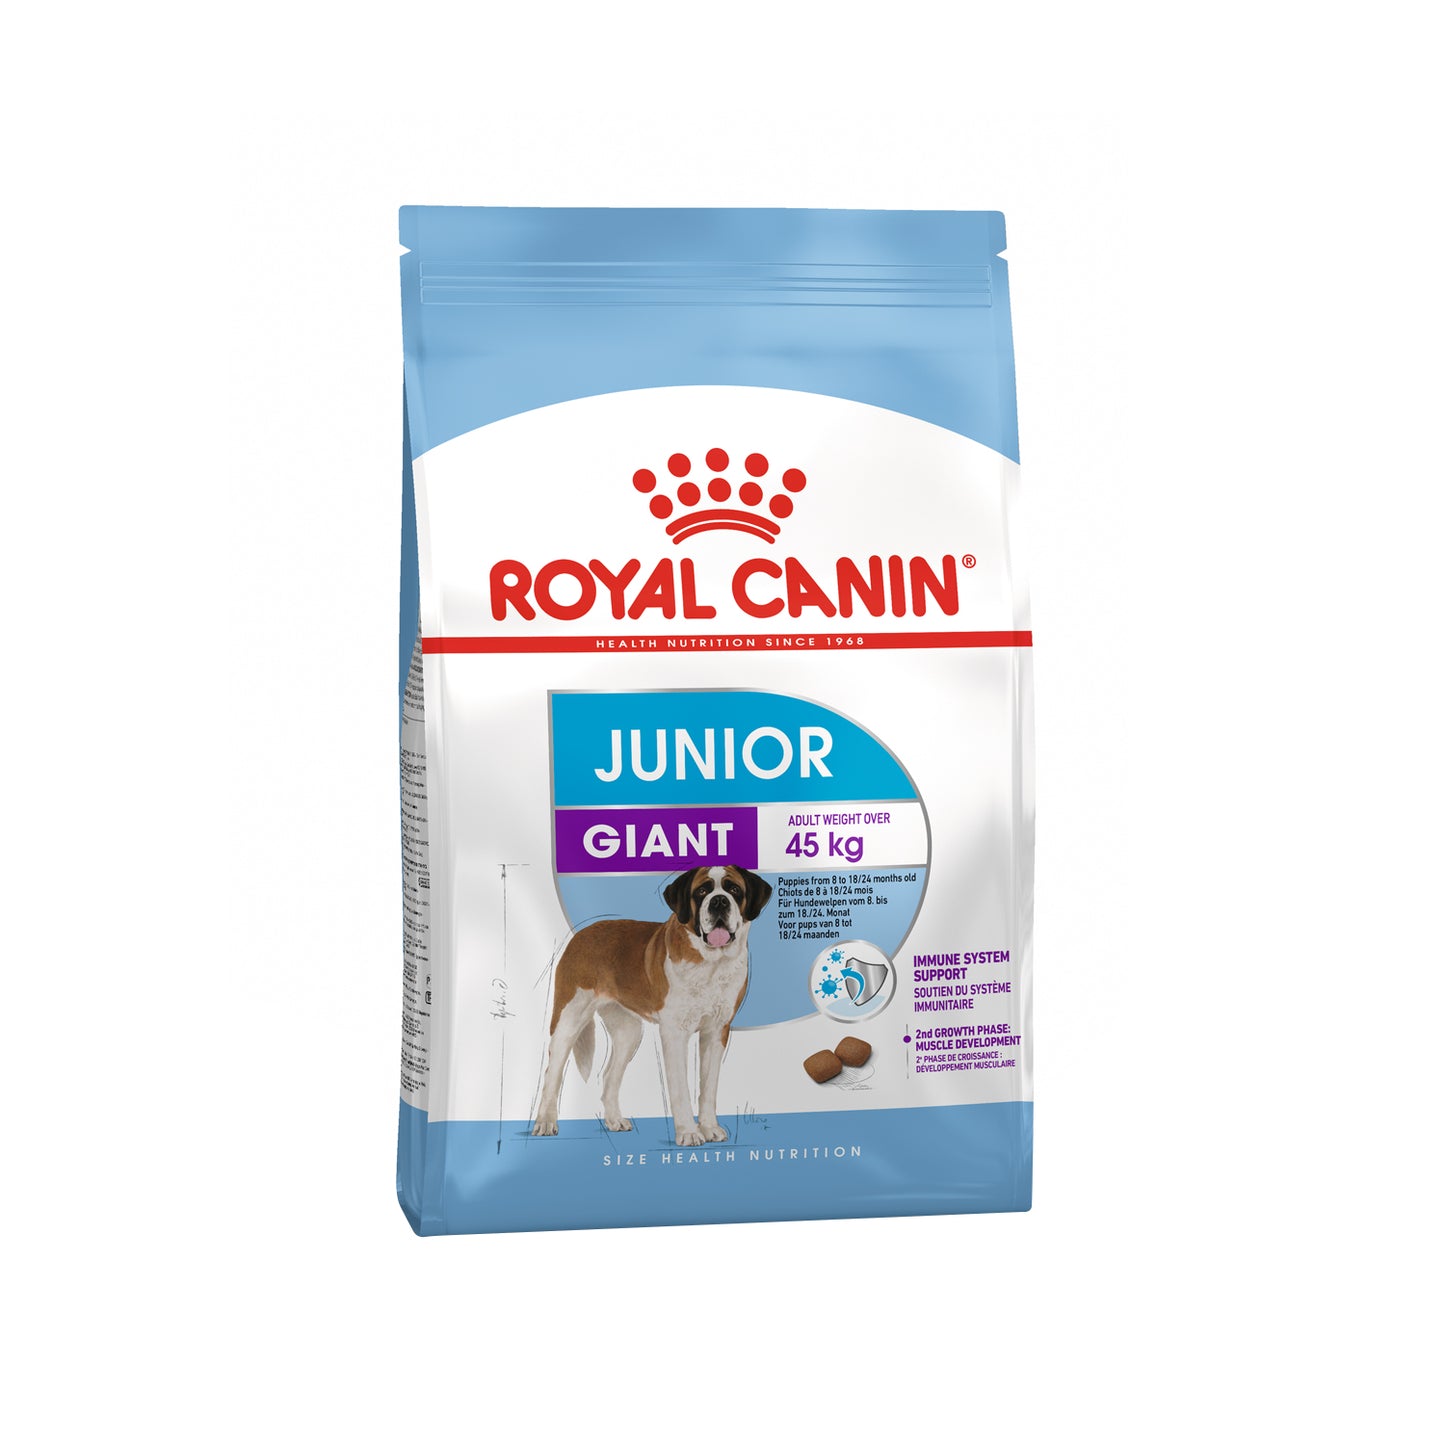 Royal Canin - Giant Junior Dry Dog Food